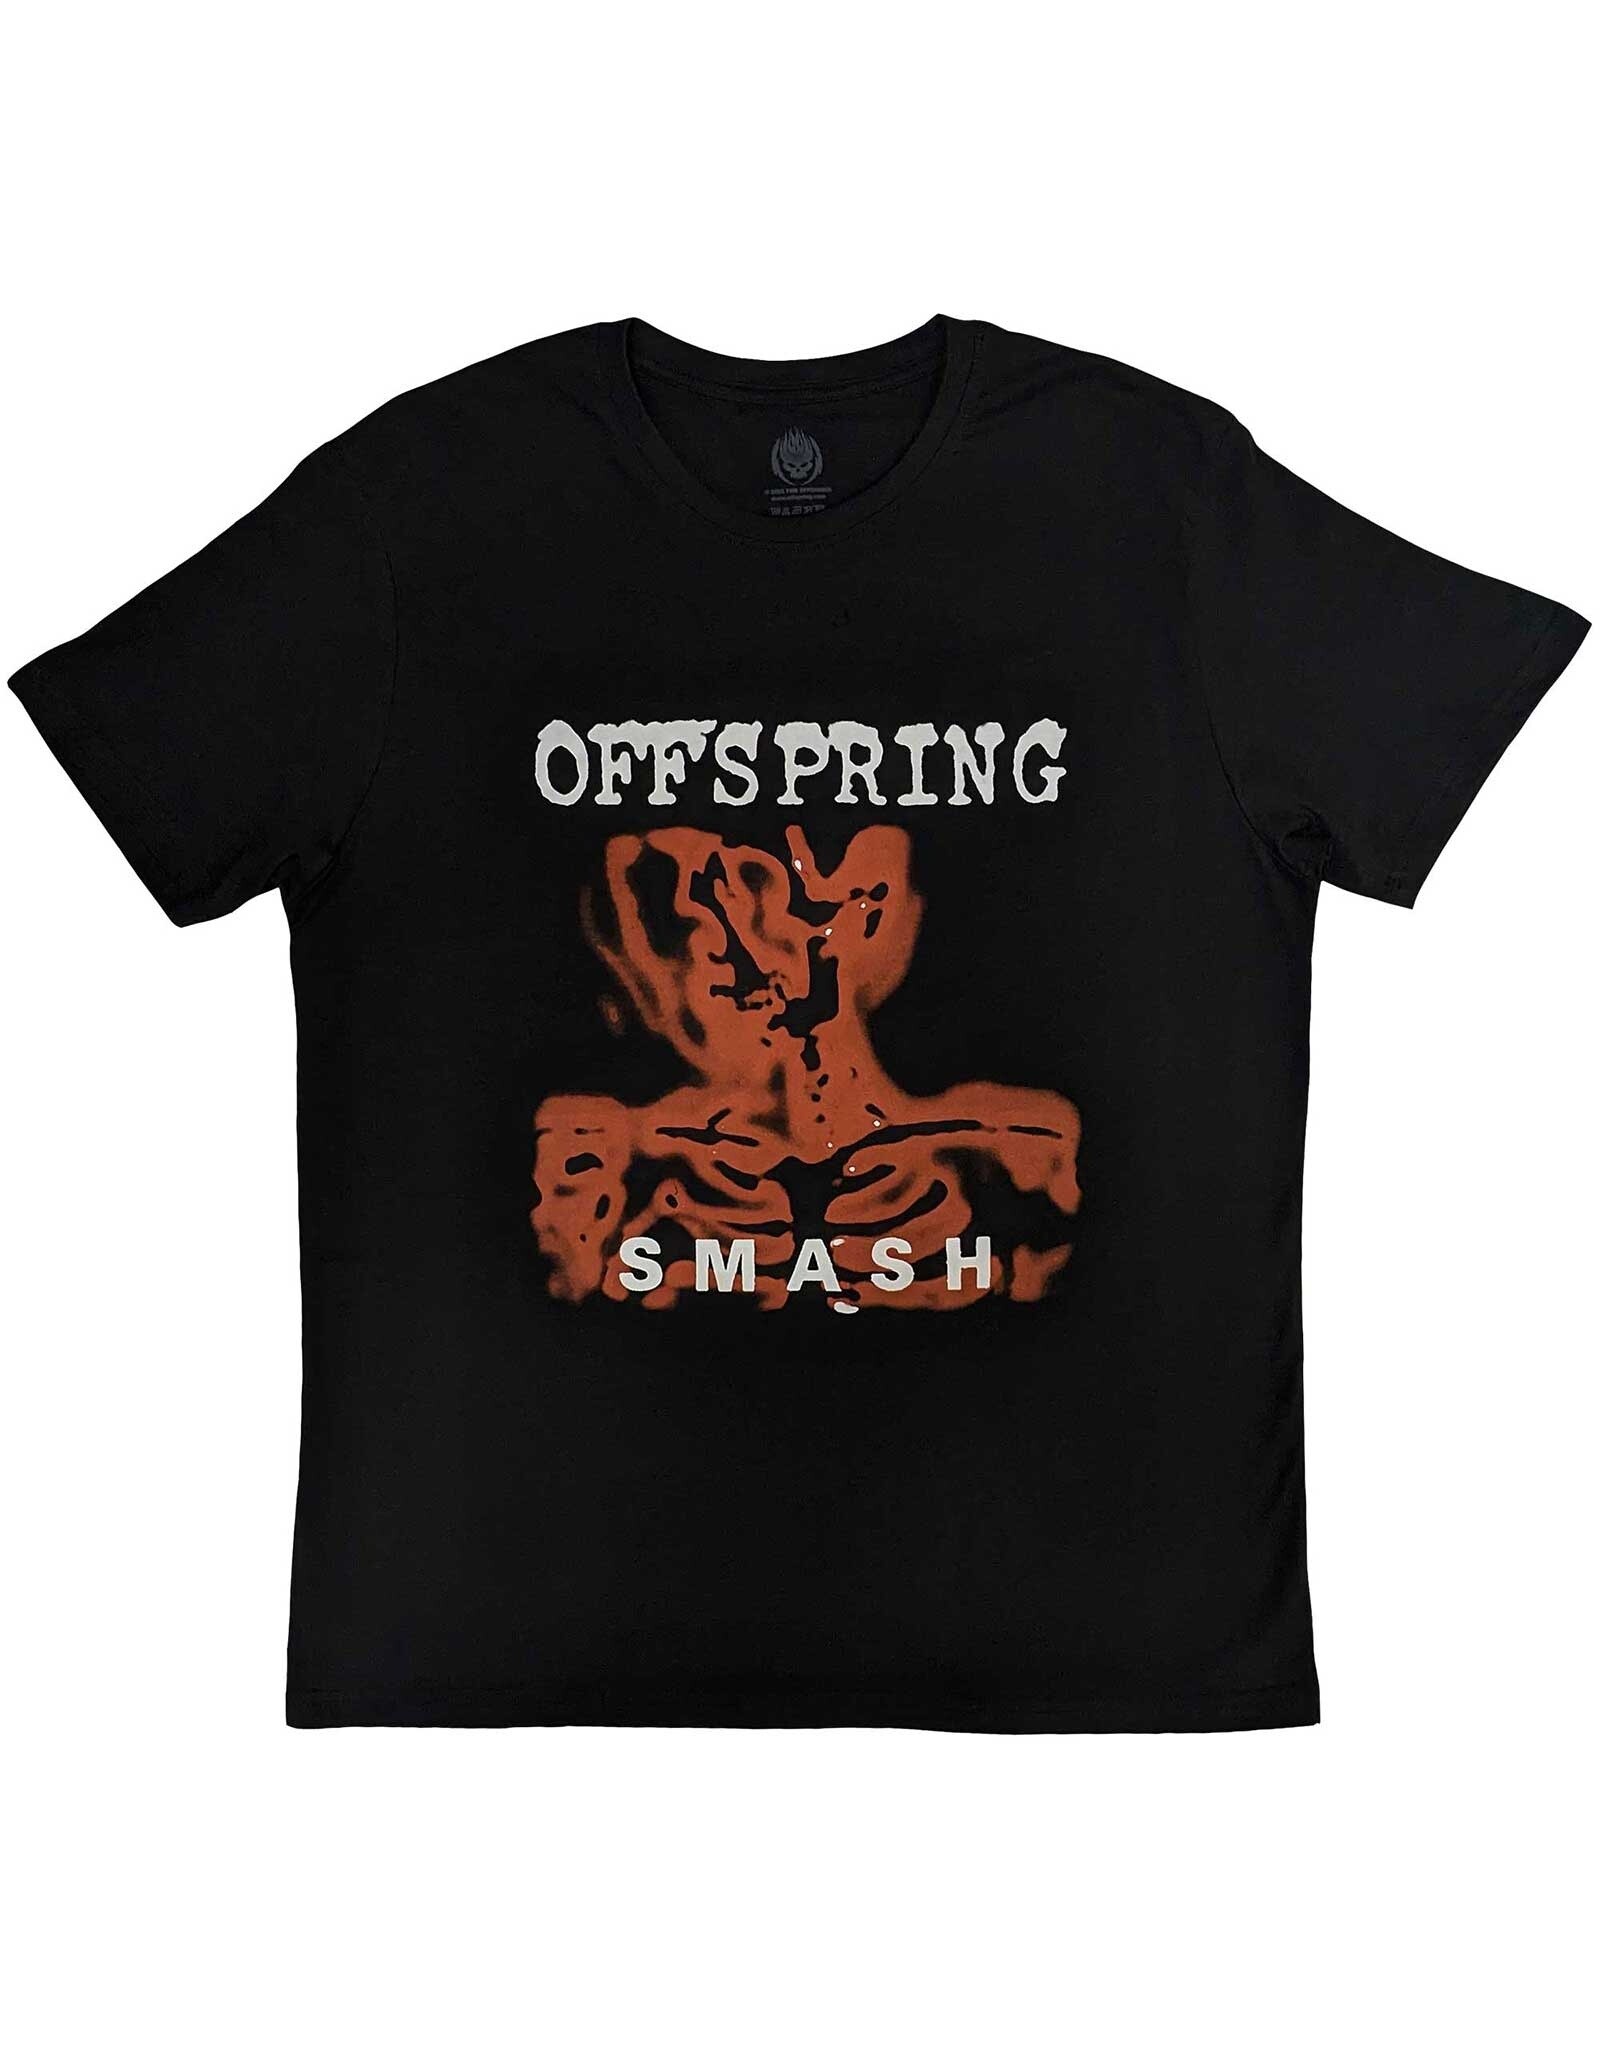 Offspring / Smash 30th Anniversary Tee